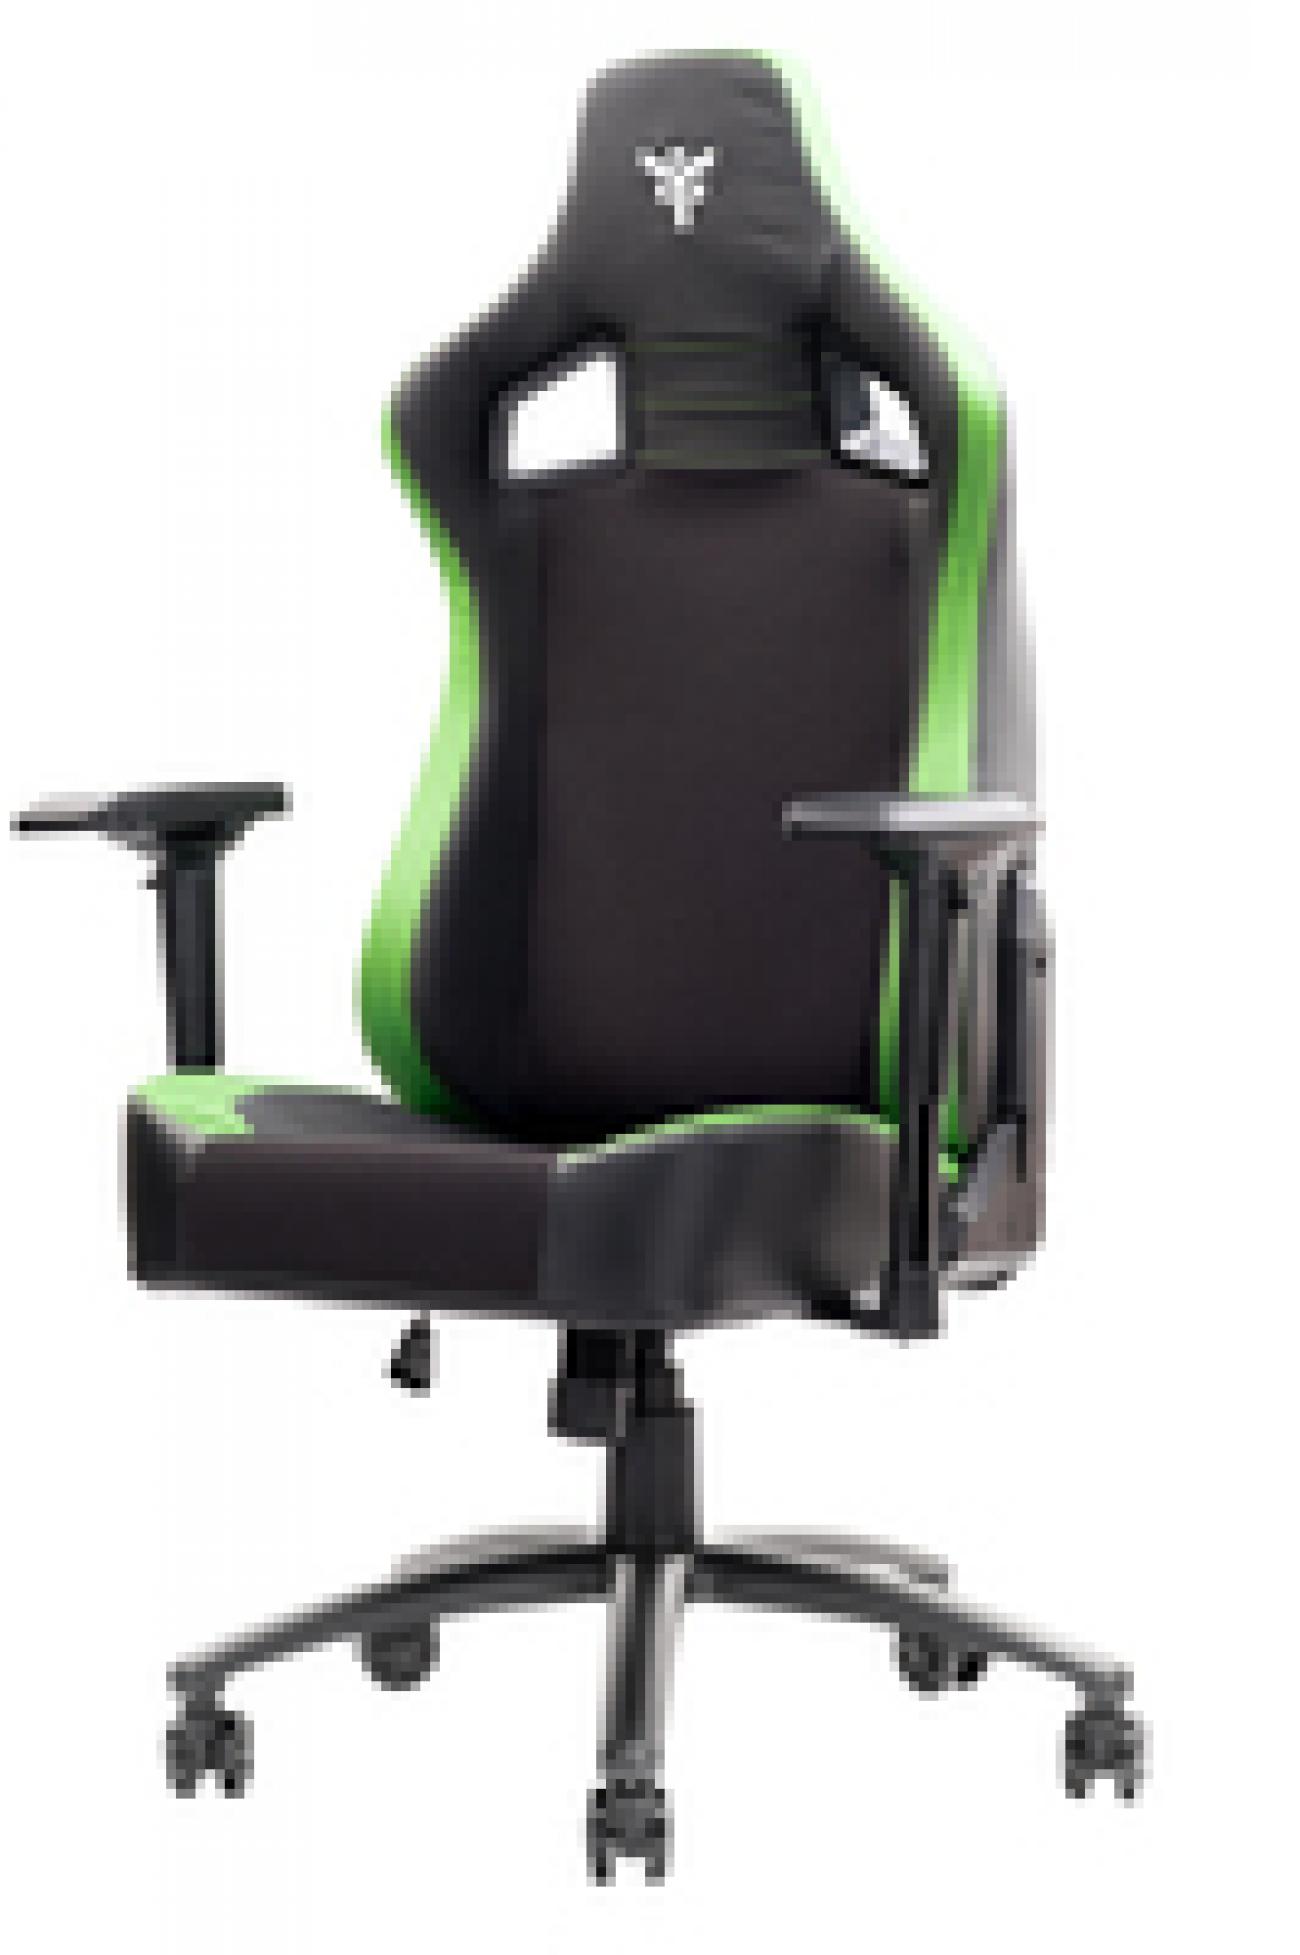 itek Gaming Chair SCOUT PM30 - PVCe Tessuto, Braccioli 4D, Nero Verde